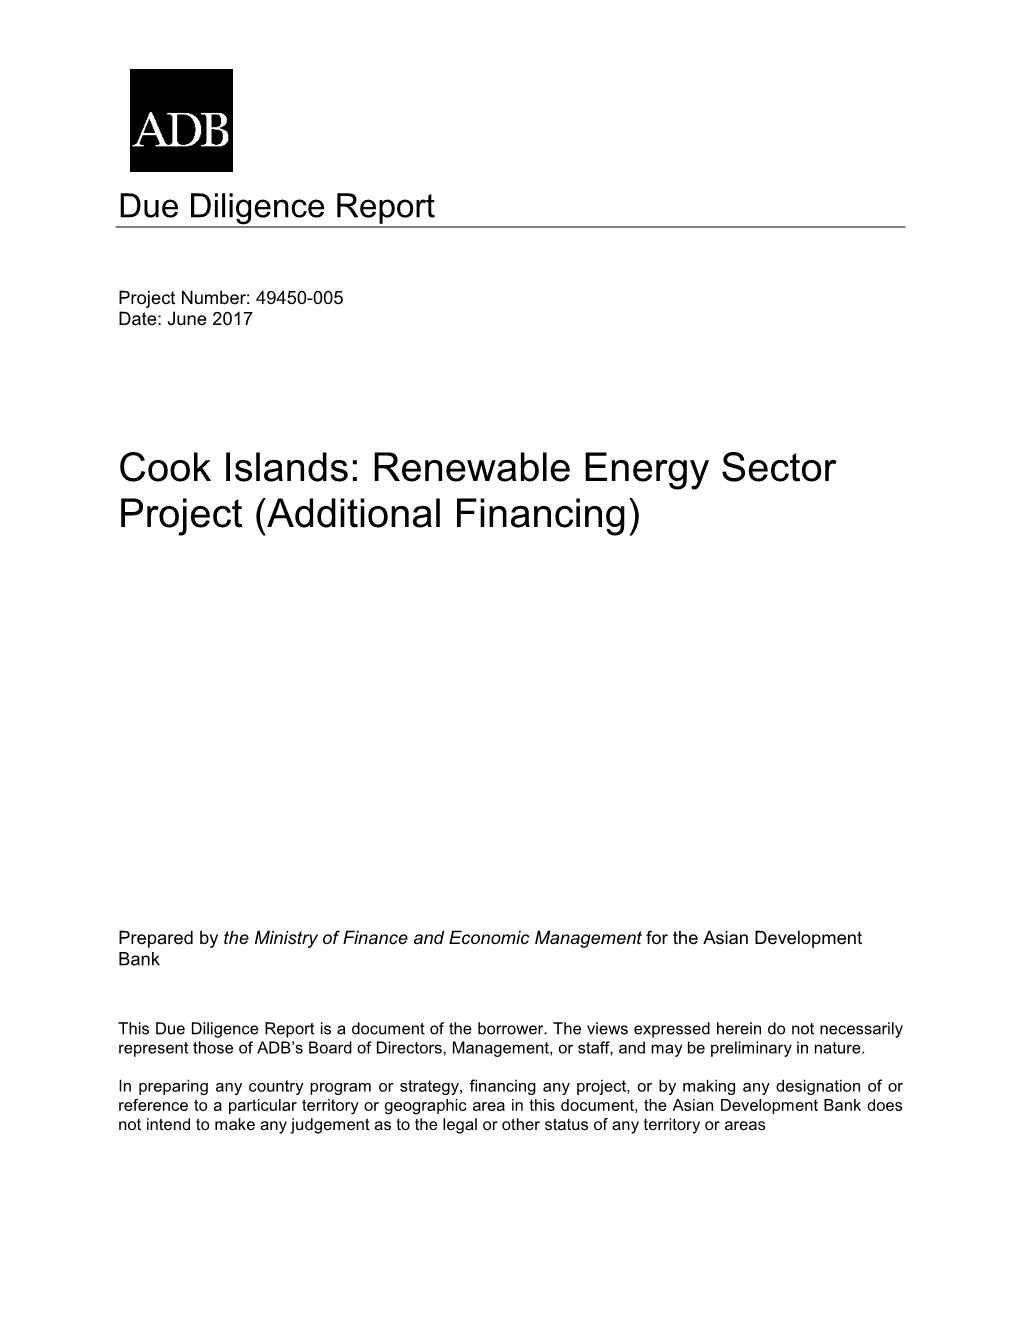 Cook Islands: Renewable Energy Sector Project (Additional Financing)